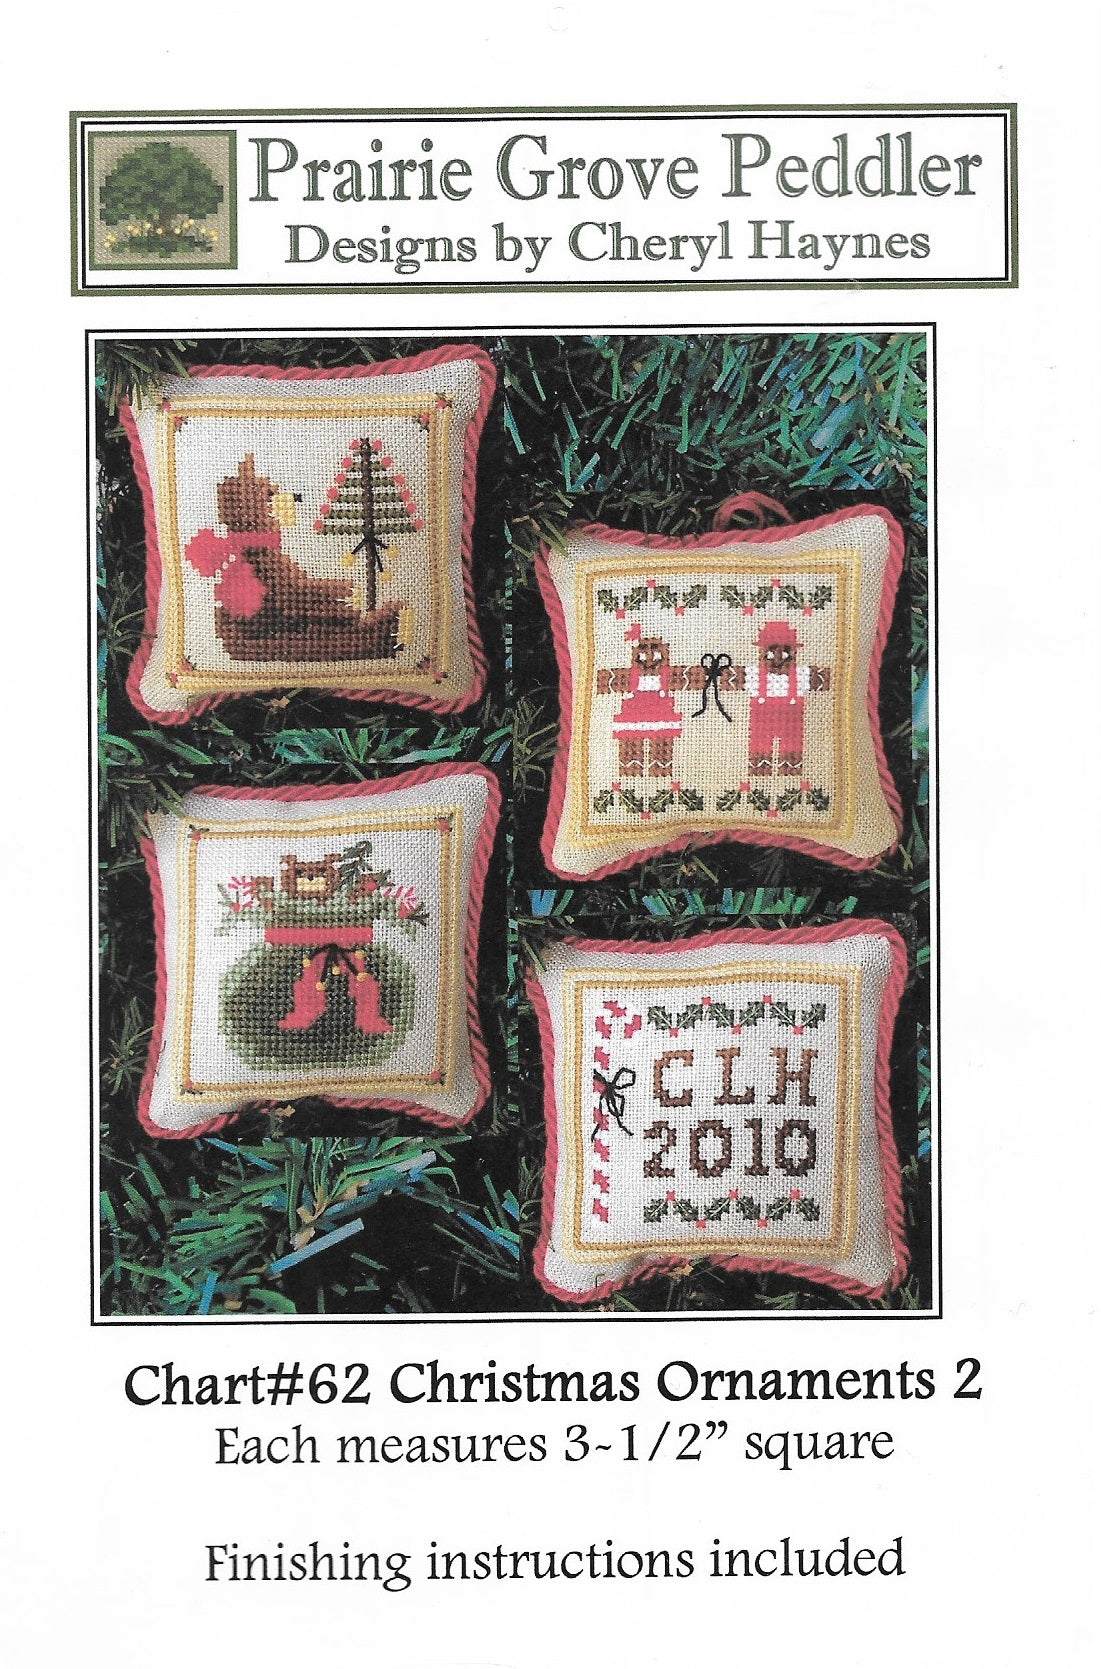 Prairie Grove Peddler Christmas Ornaments 2 cross stitch pattern